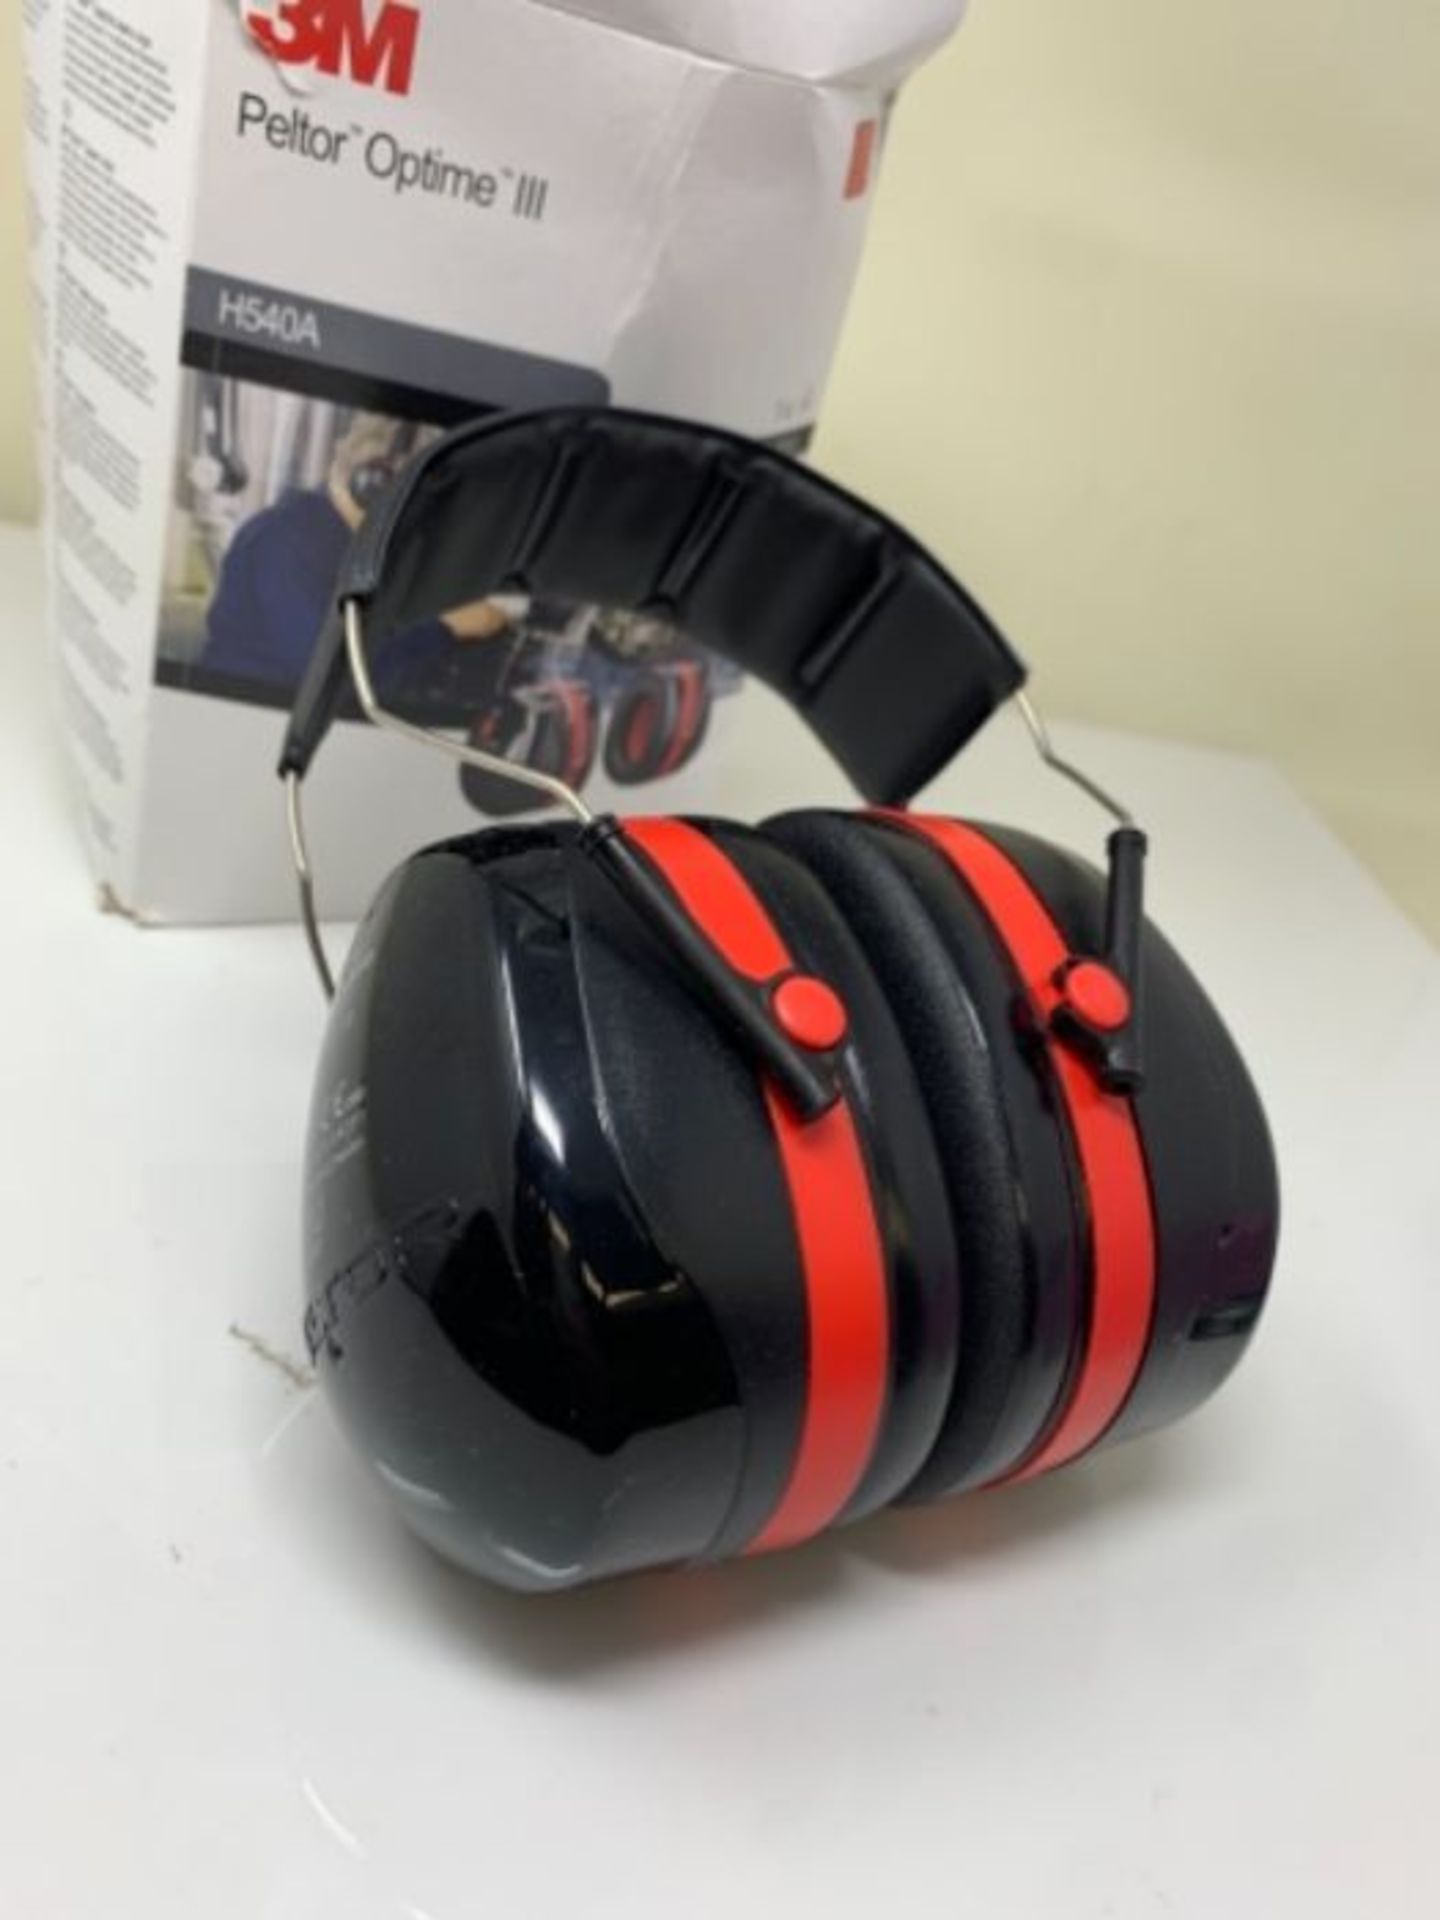 3M Peltor Optime III Earmuffs with Headband, 35 dB, Black/Red  Protection against h - Image 3 of 3